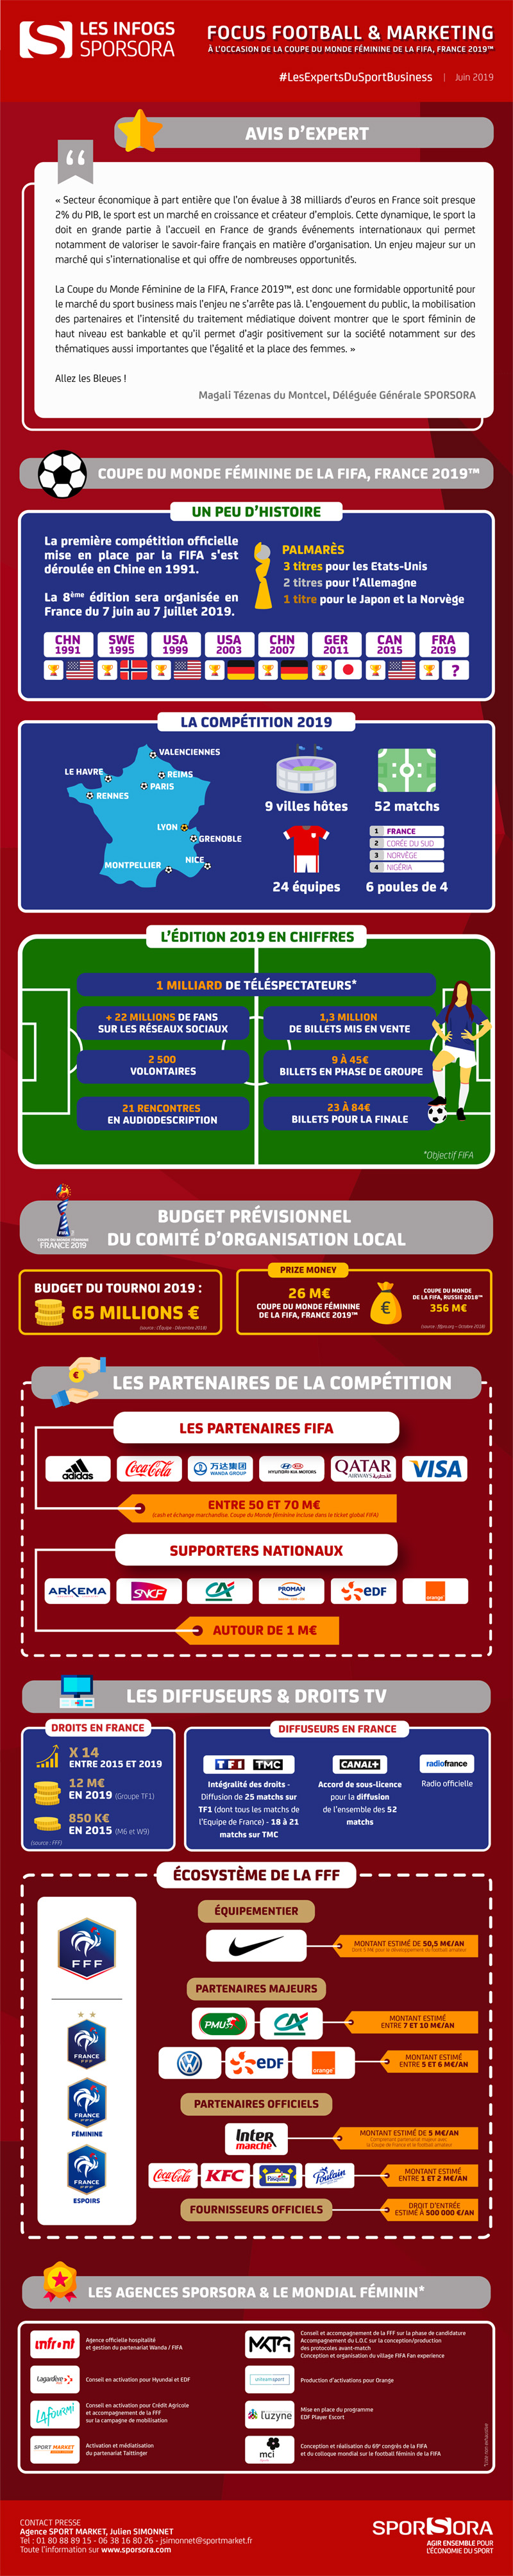 HD Infographie Sporsora Foot FIFA WC19